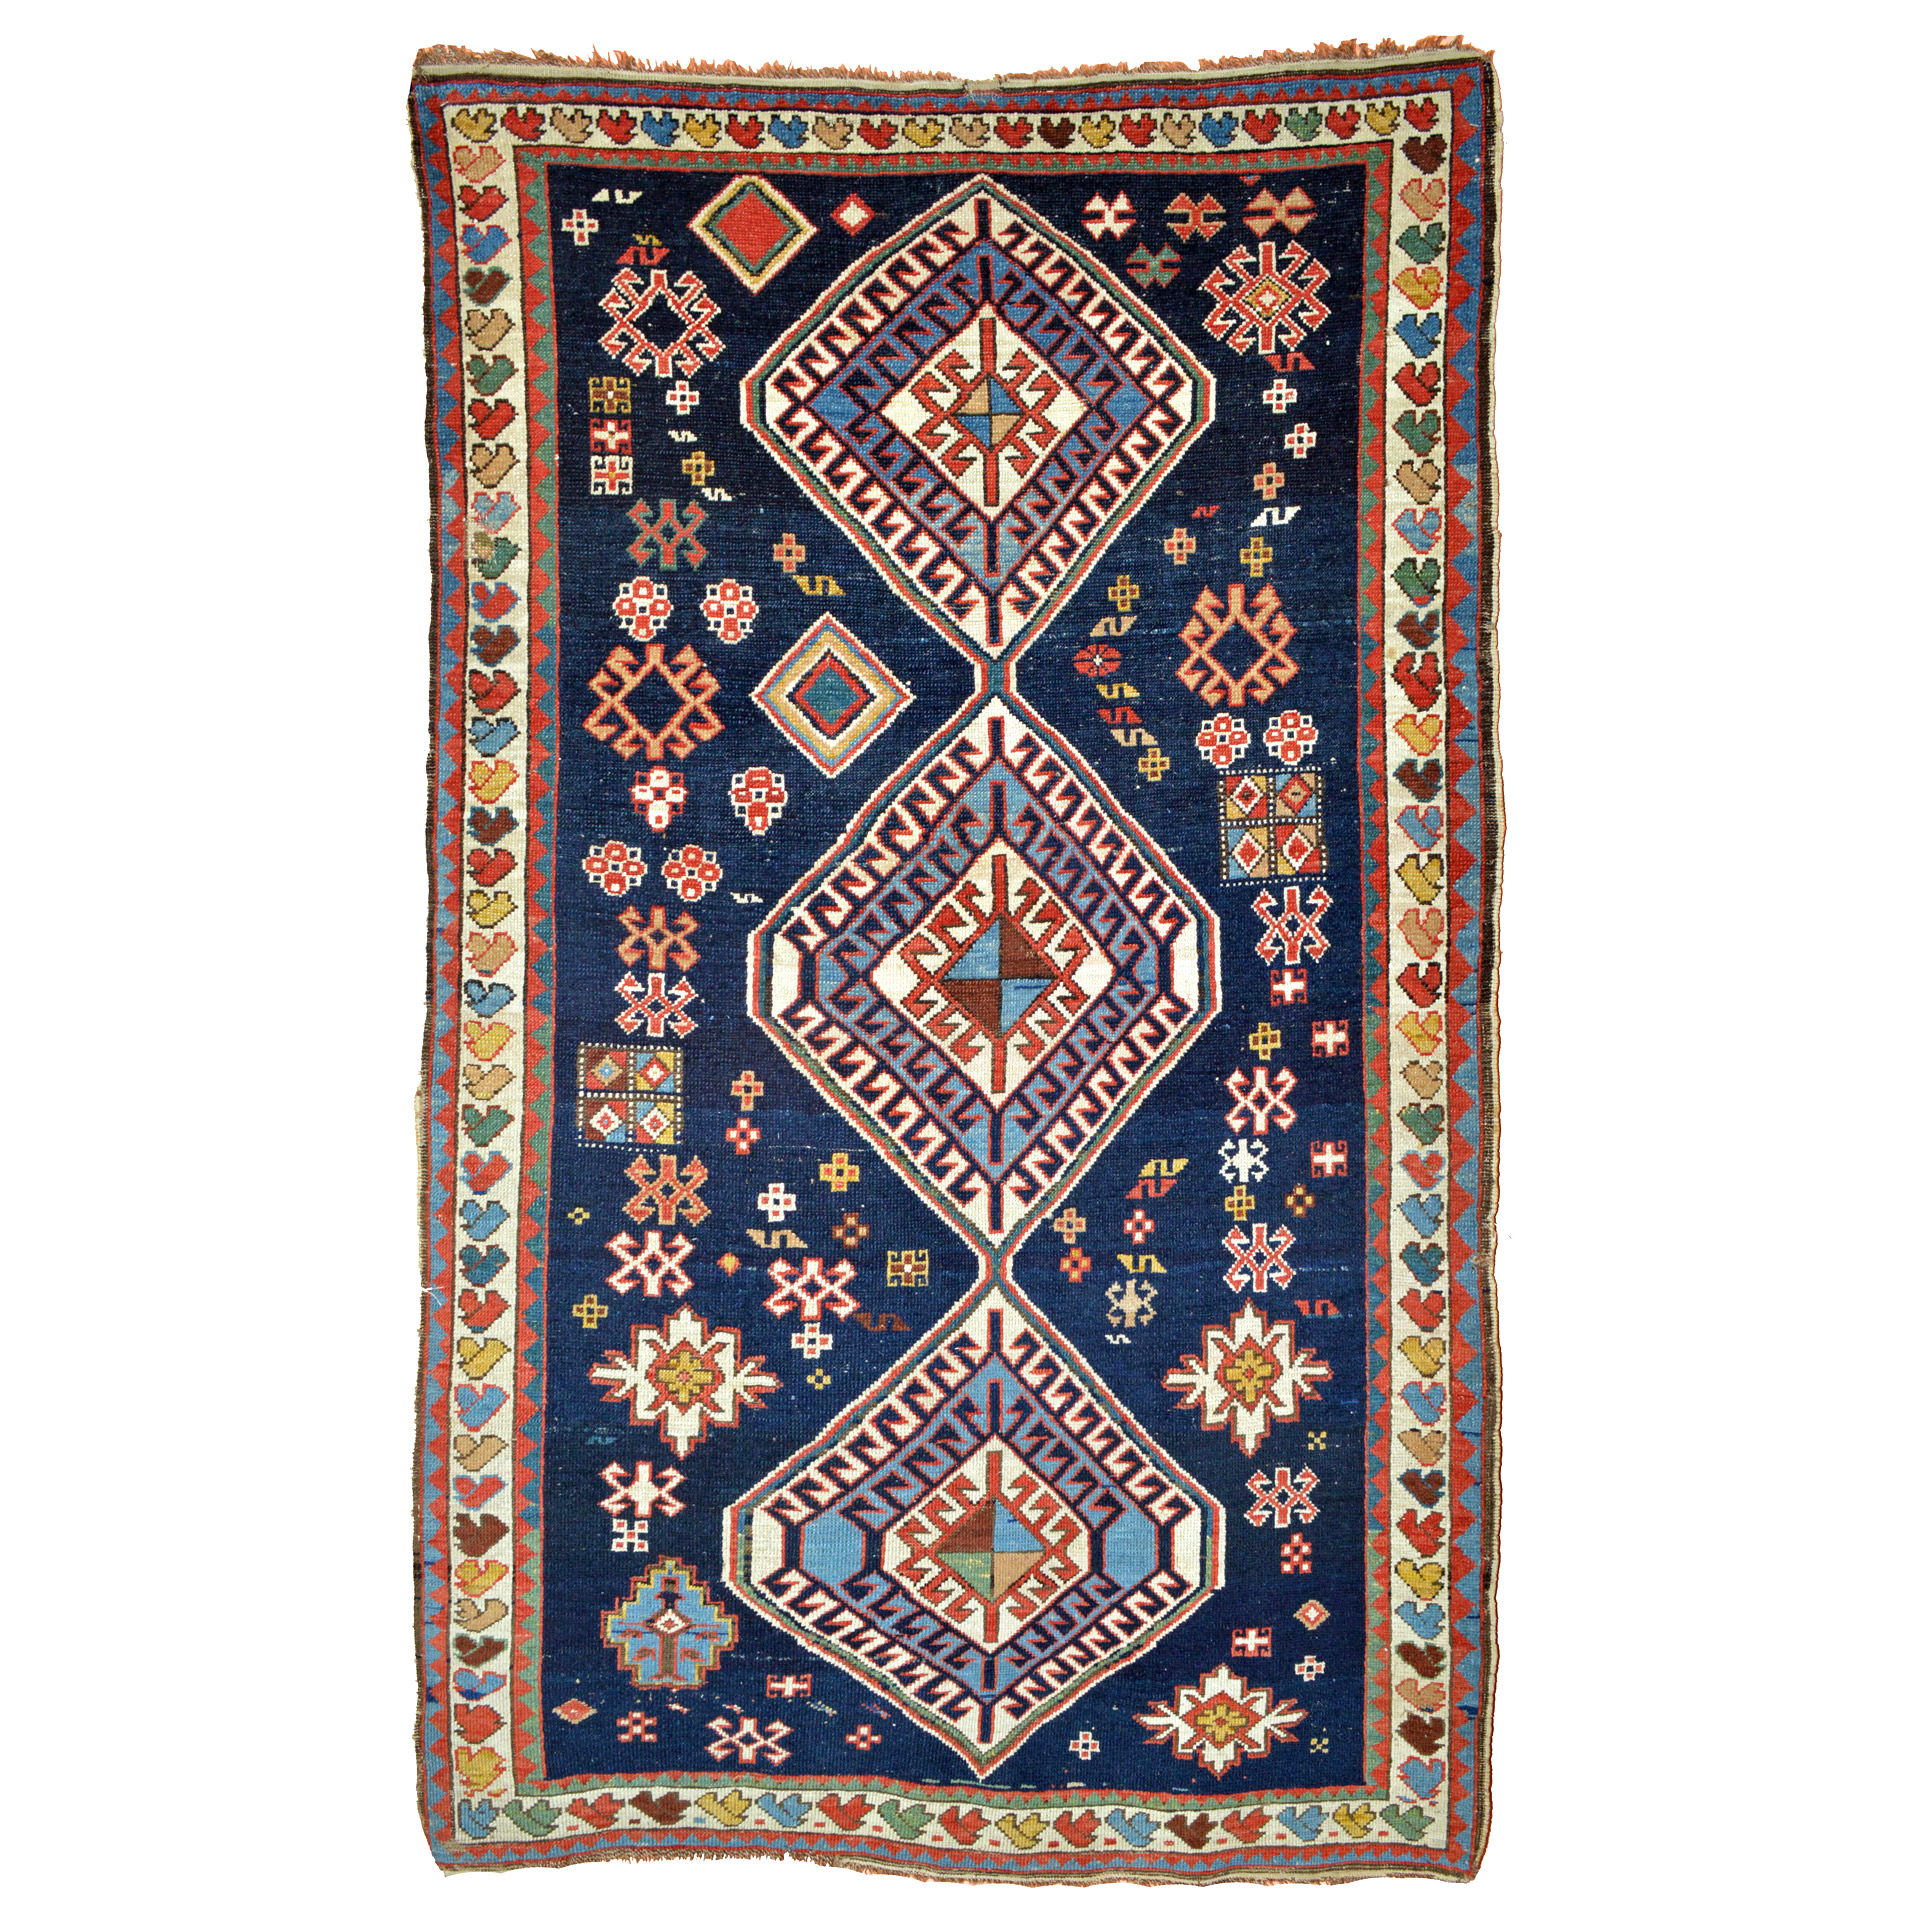 Antique northwest Persian Bakshaish carpet from Douglas Stock Gallery, antique Oriental rugs Boston,MA area